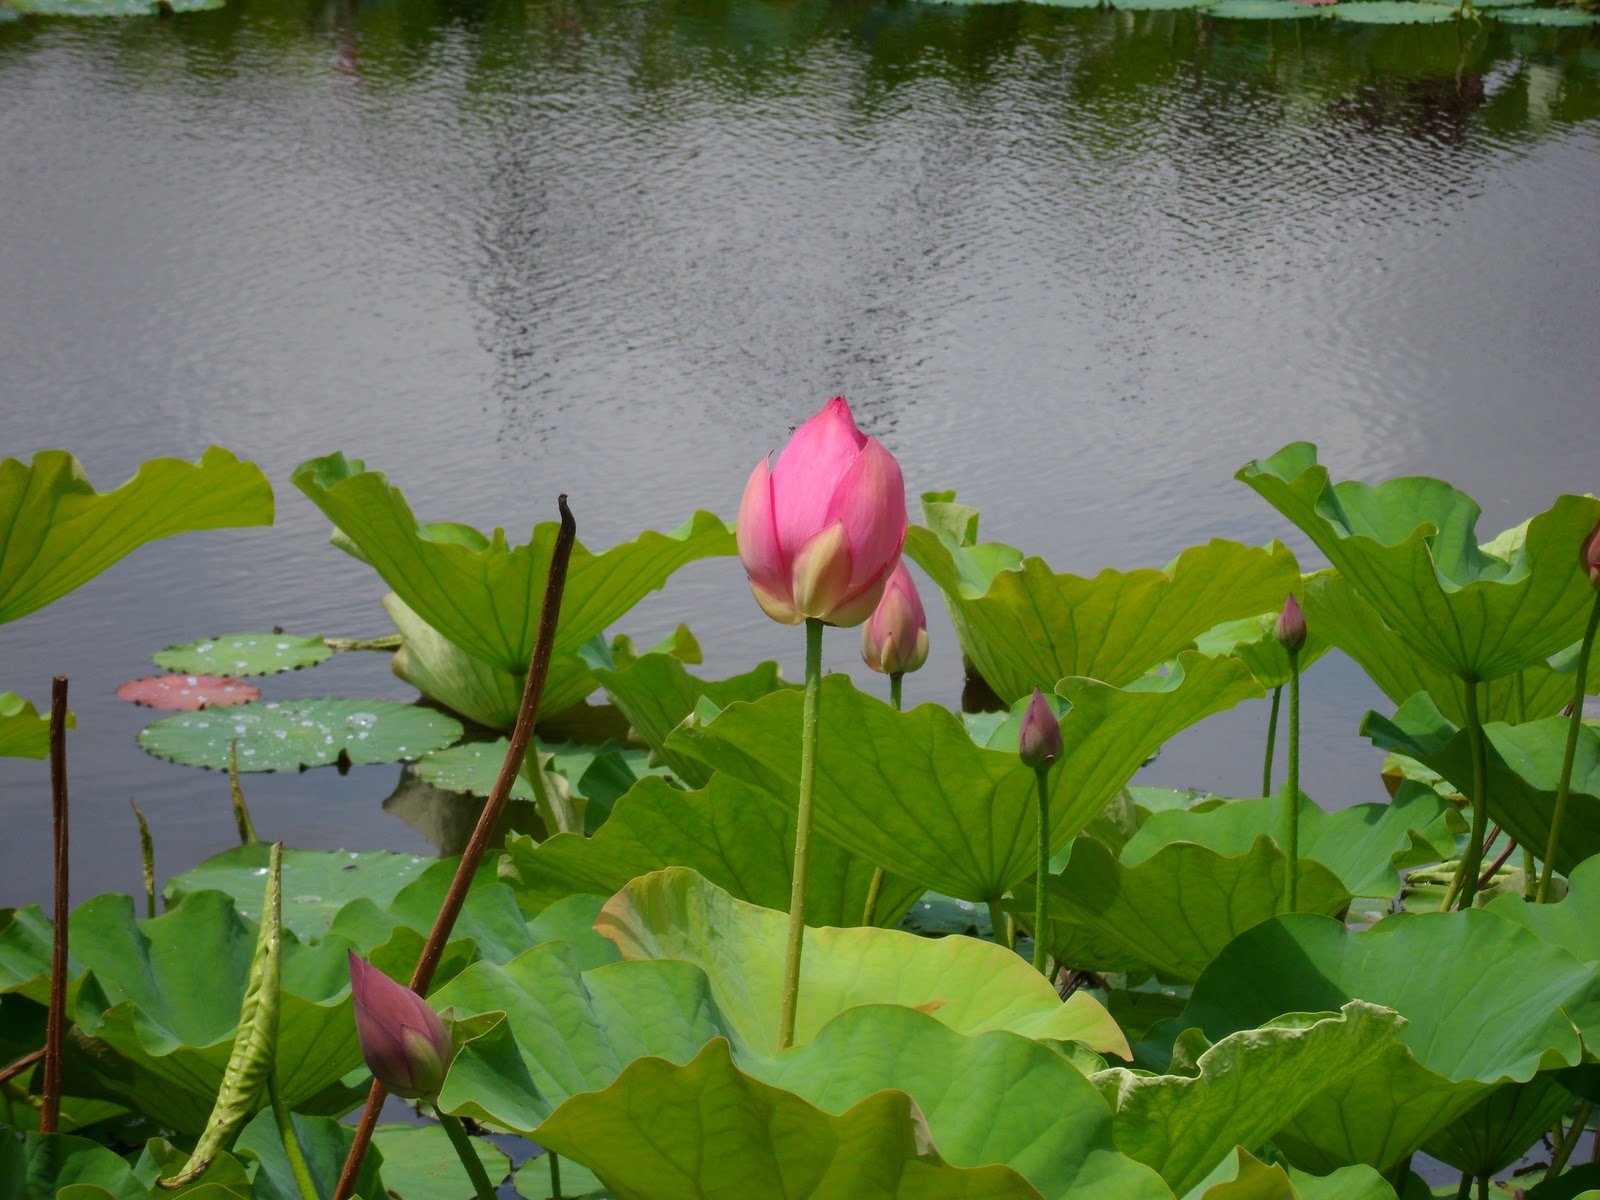 Lotus Flower growing locally